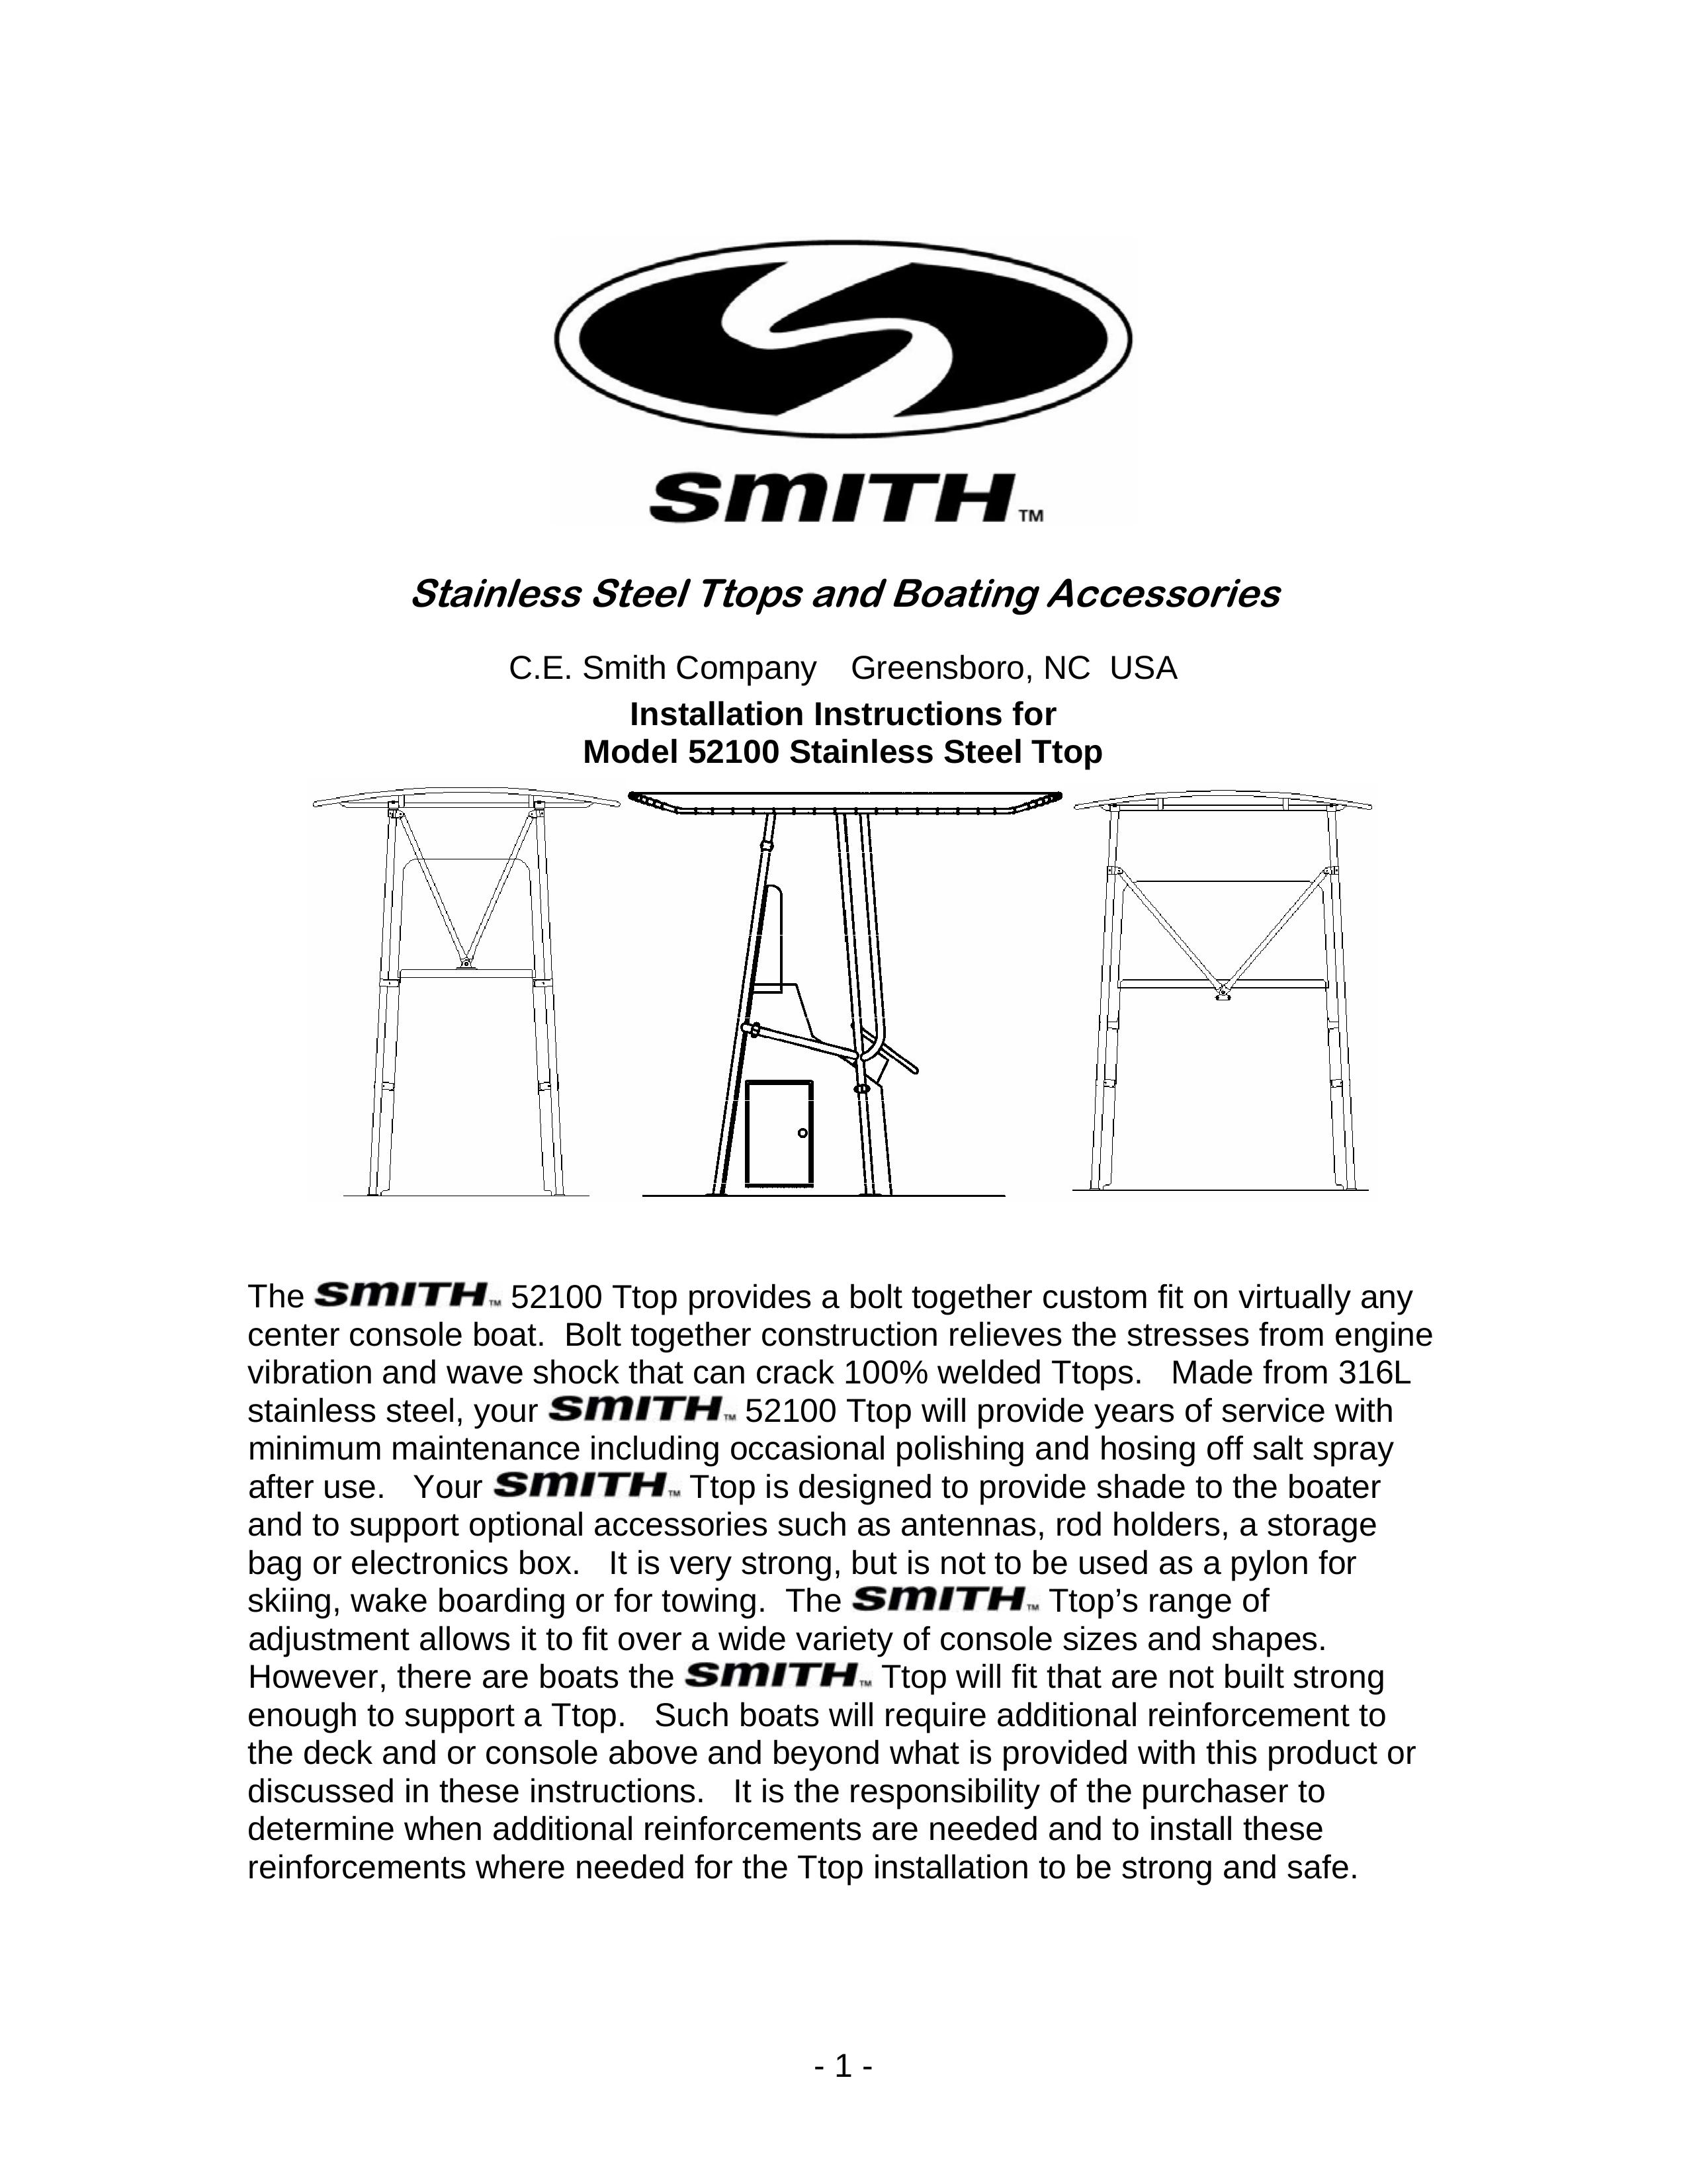 C. E. Smith 52100 Boating Equipment User Manual